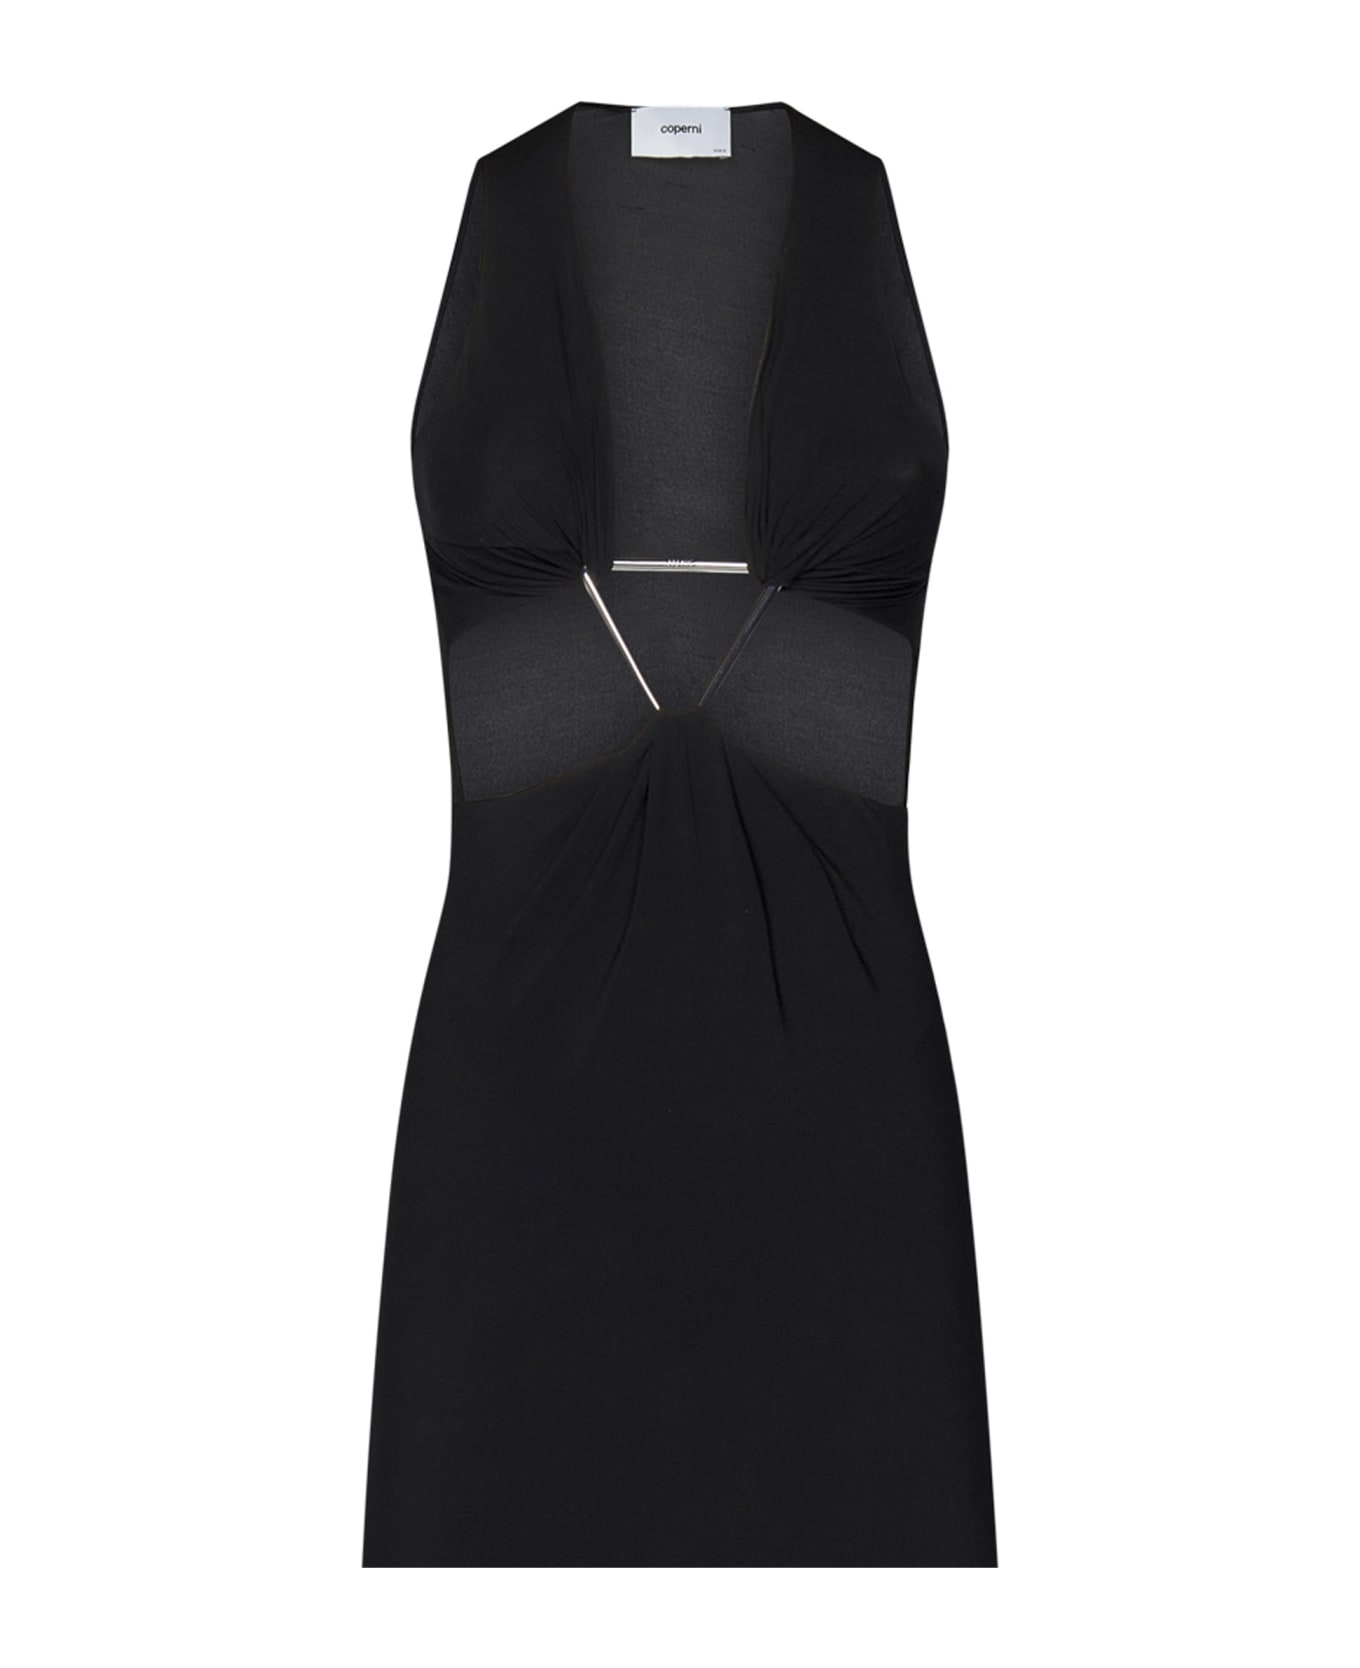 Coperni Cut-out Triangle Long Dress - Black